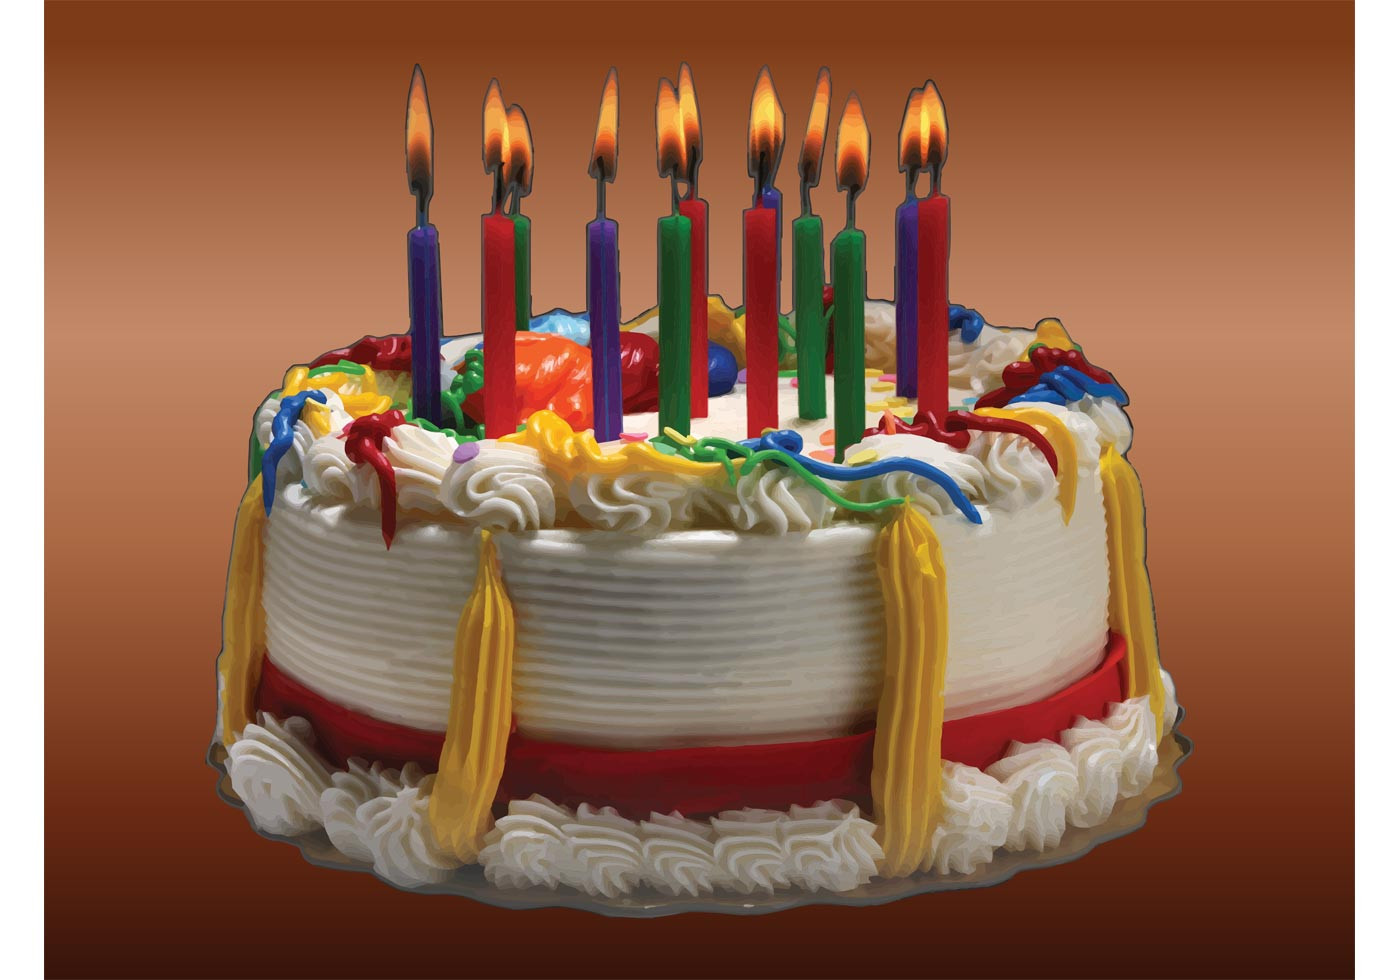 Image Of Birthday Cake
 Birthday Cake Image Download Free Vector Art Stock